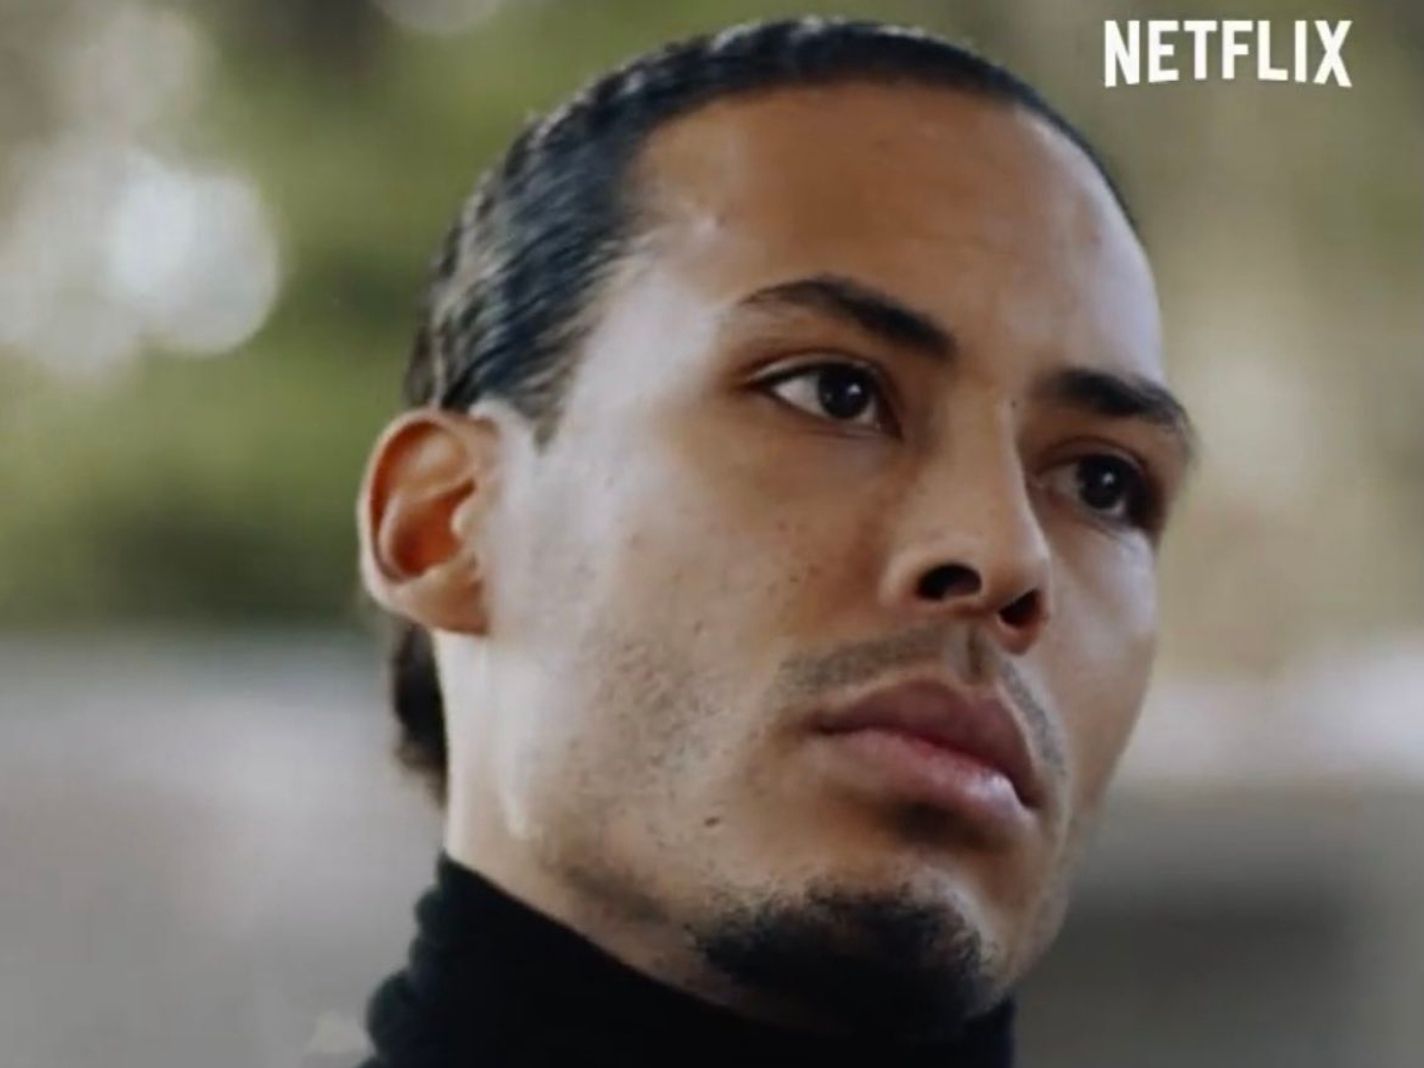 Twitter reacts to discovering Virgil van Dijk in a Netflix promo